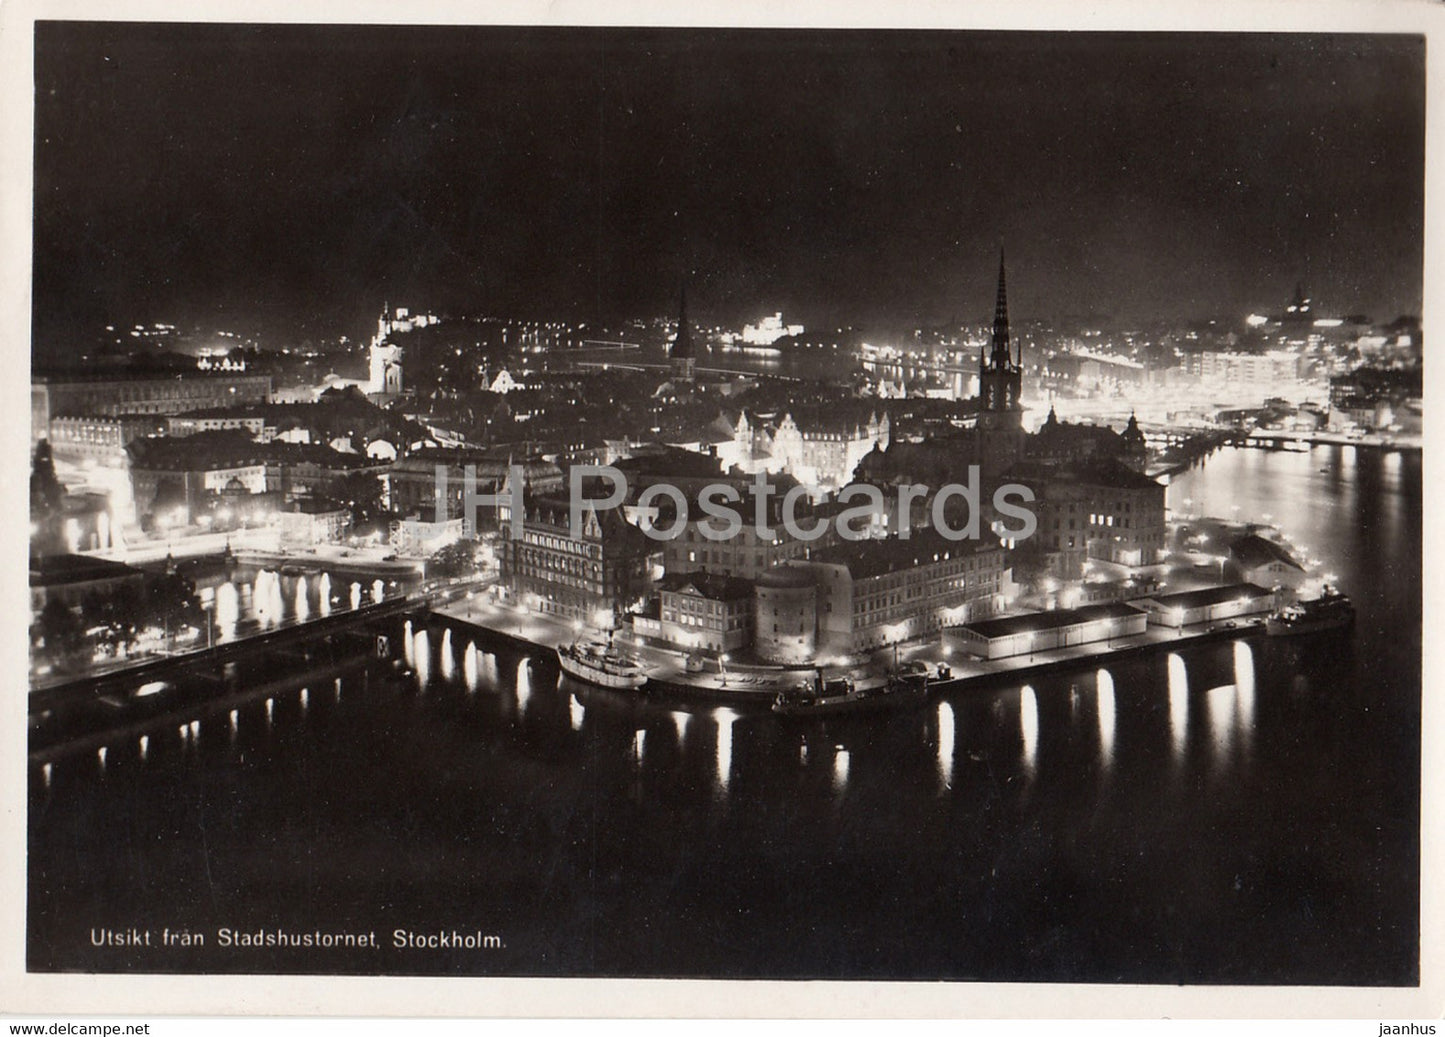 Stockholm - Utsikt fran Stadshustronet - View from Stadshustornet - old postcard - 1957 - Sweden - used - JH Postcards